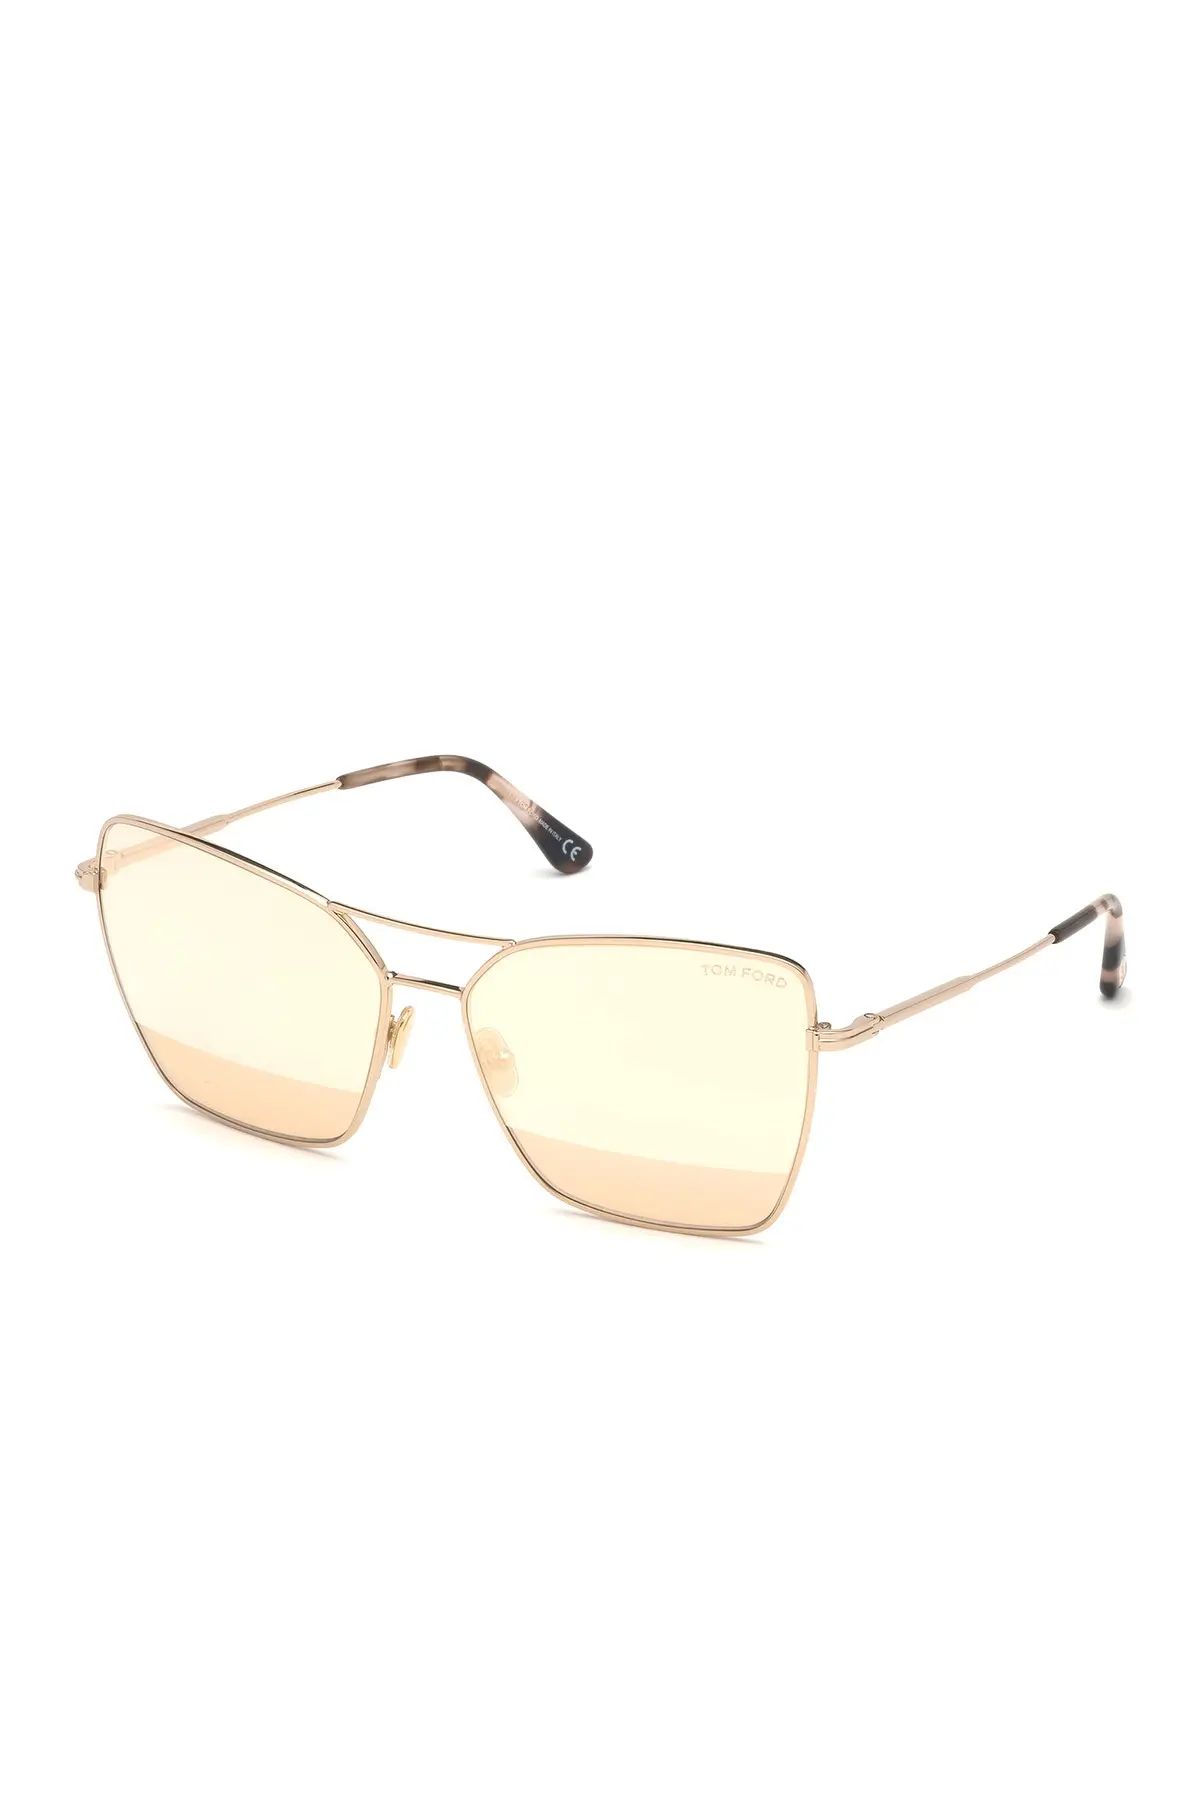 Tom Ford Shiny Rose Gold 61mm Square Aviator Polarized Sunglasses at Nordstrom Rack | Nordstrom Rack